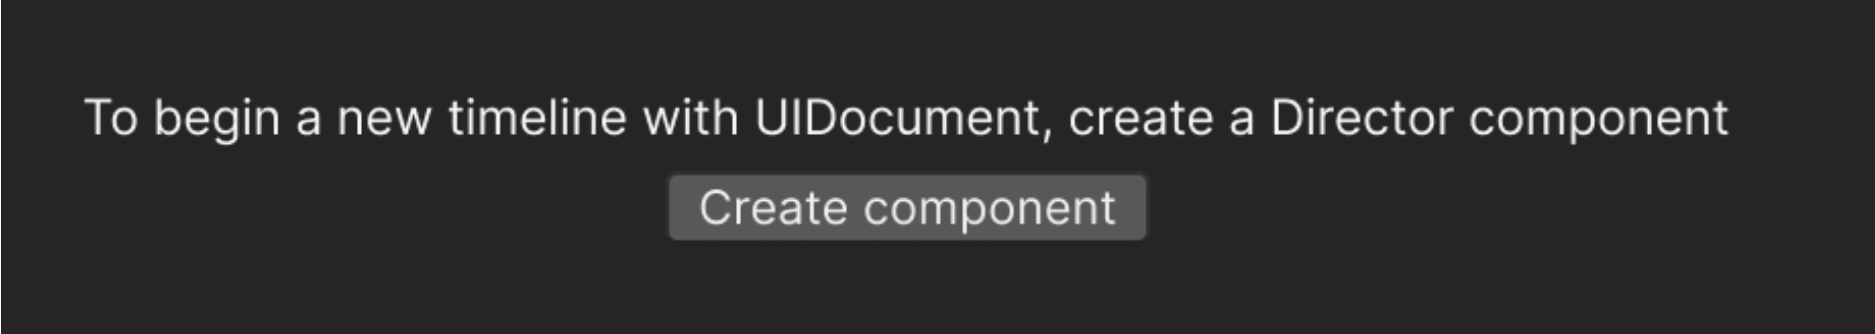 Create component button.